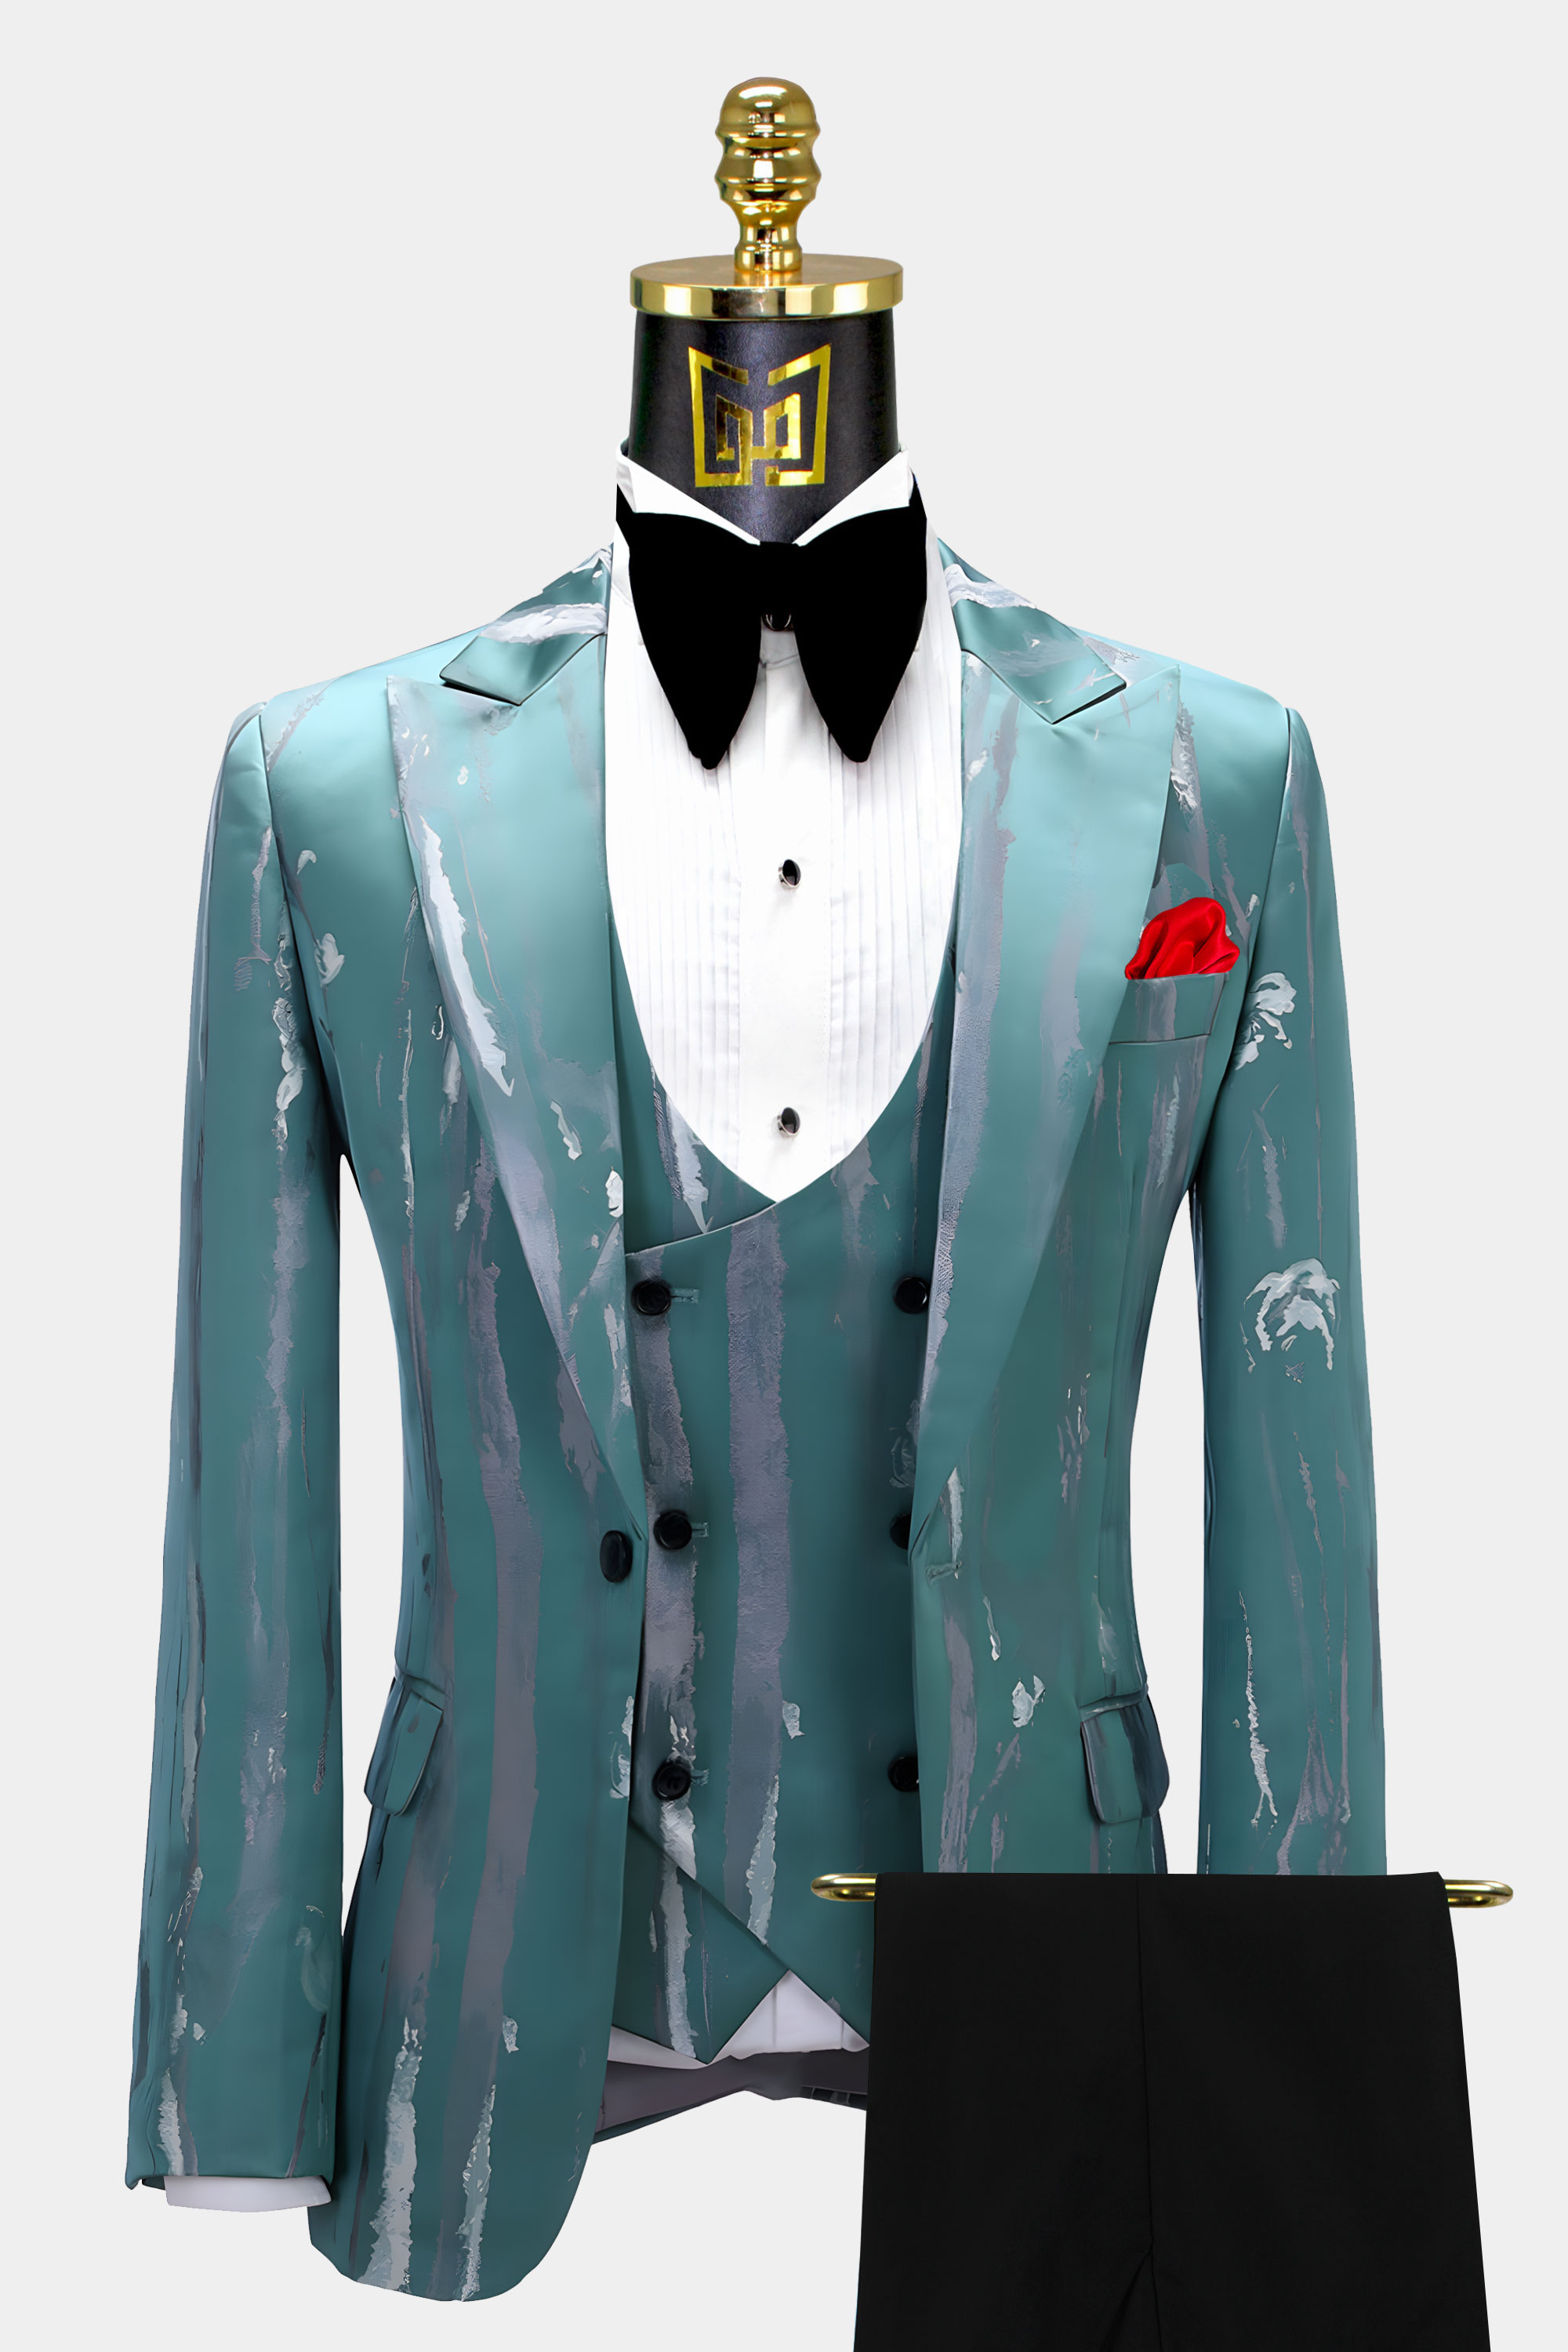 Striped-Teal-Blue-Suit-from-Gentlemansguru.com